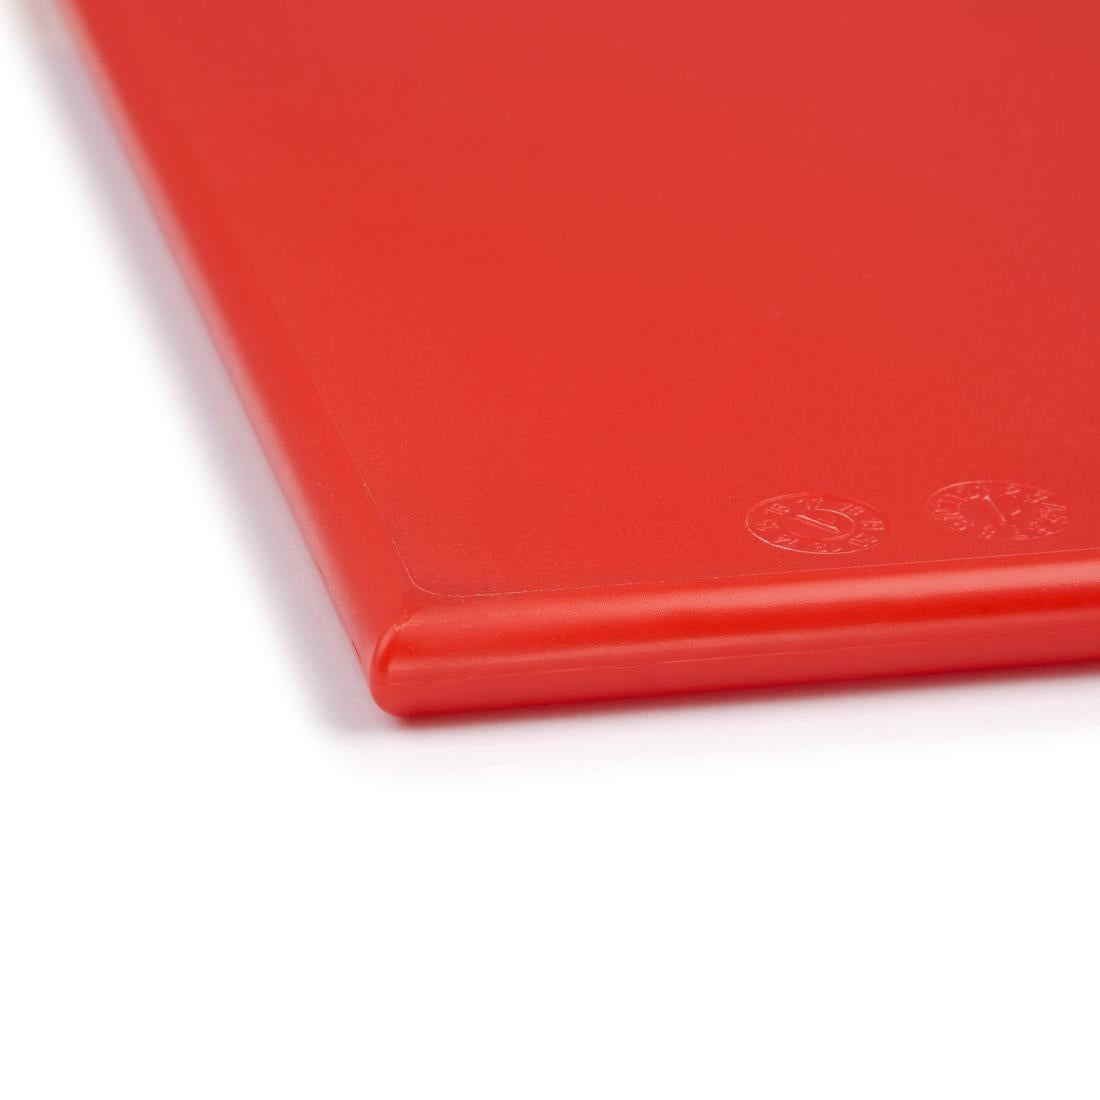 EDLP - Hygiplas High Density Chopping Board Red - 450x300x12mm 17.75x12x0.5"